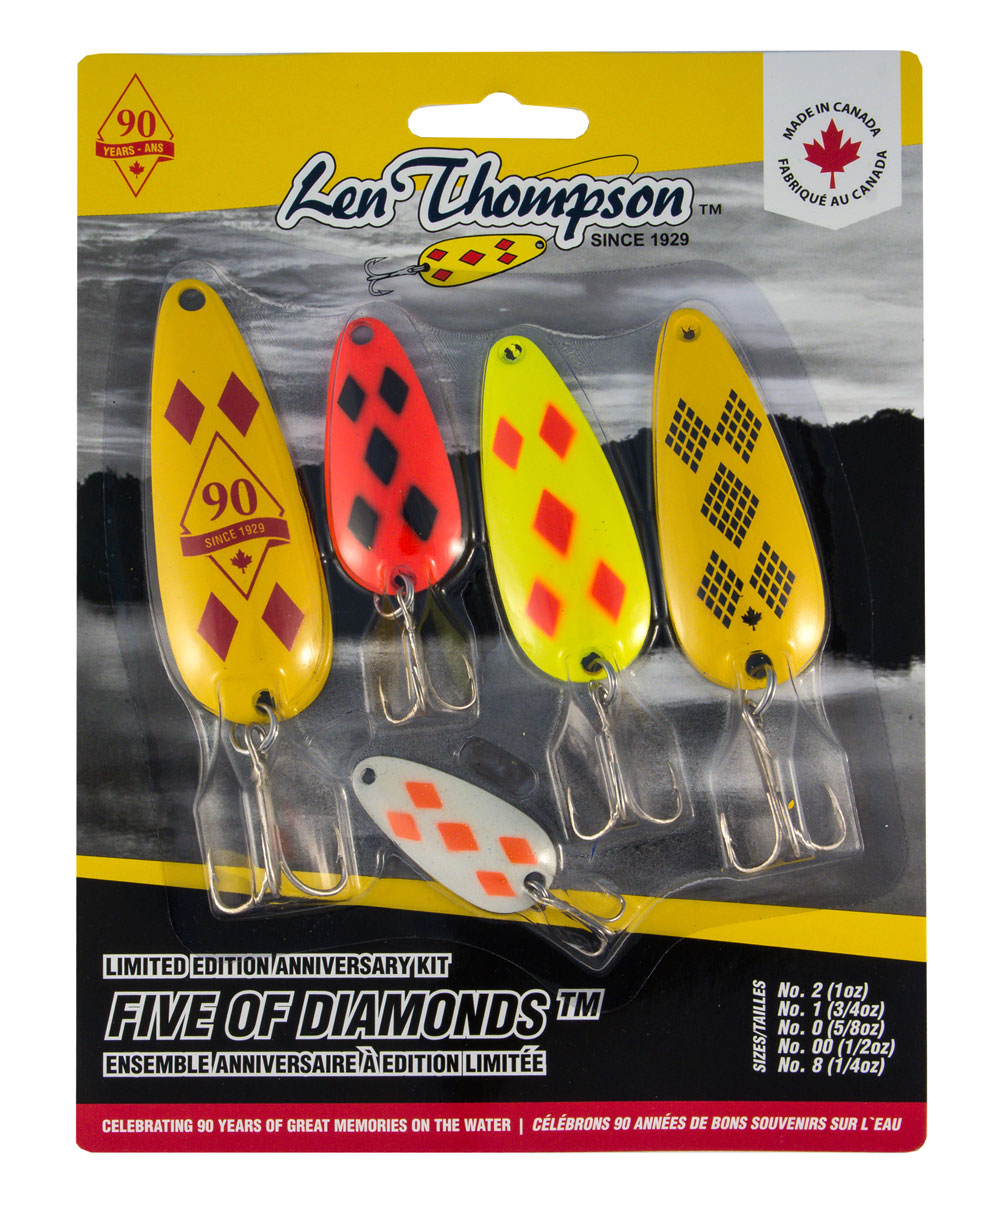 Fishing Lure Sizes - Len Thompson Fishing Lures